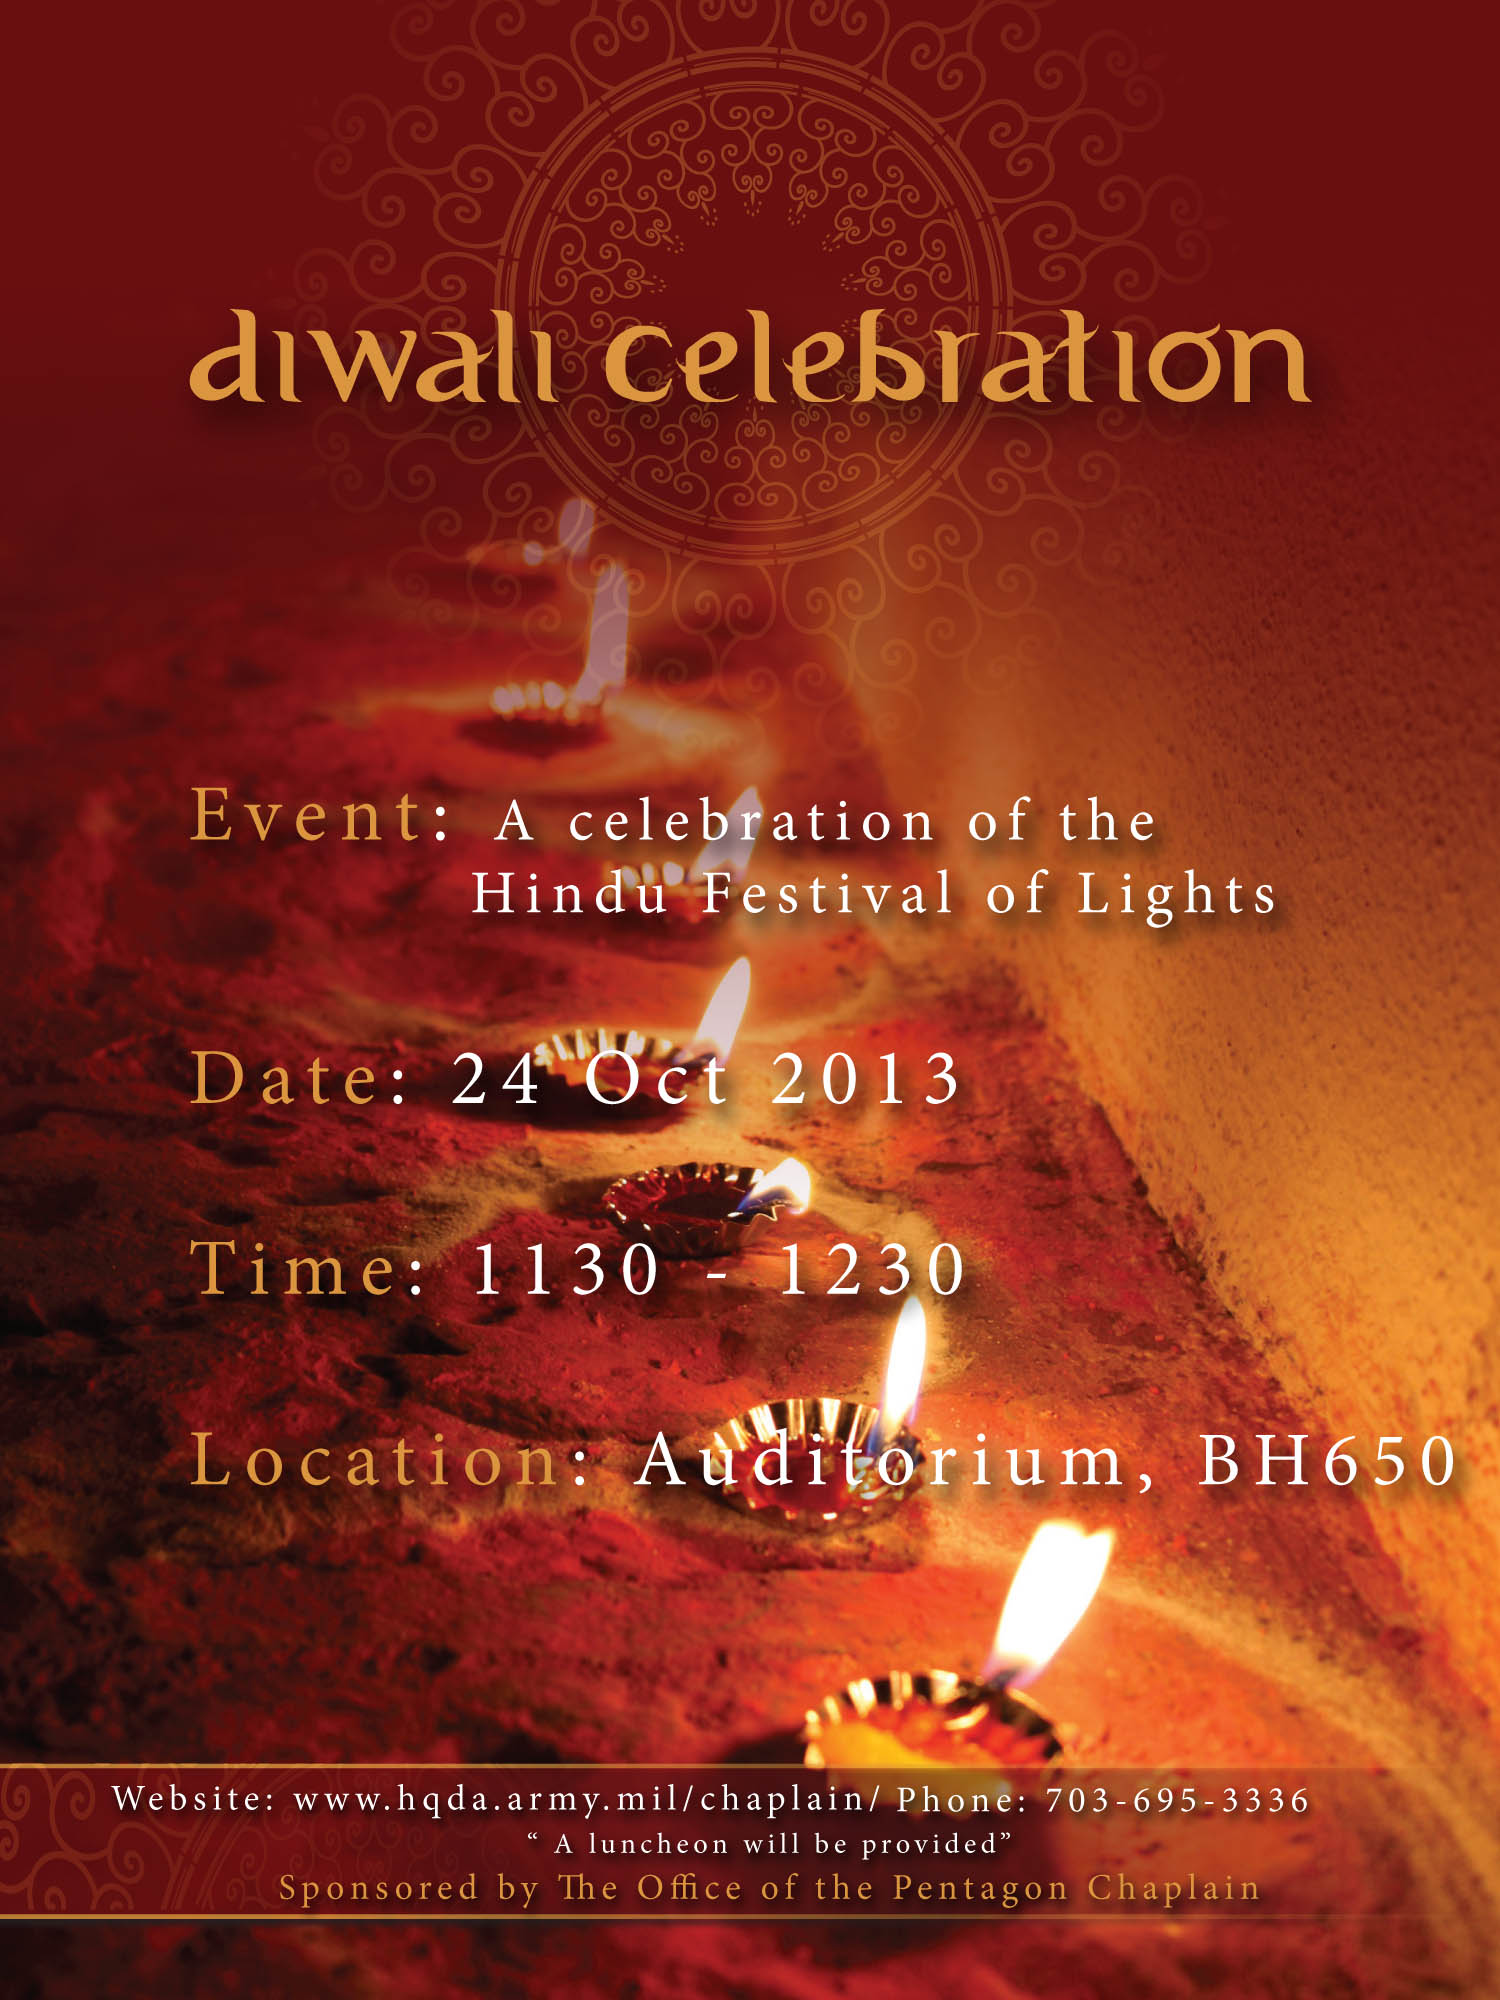 Pentagon-diwali celebration2013